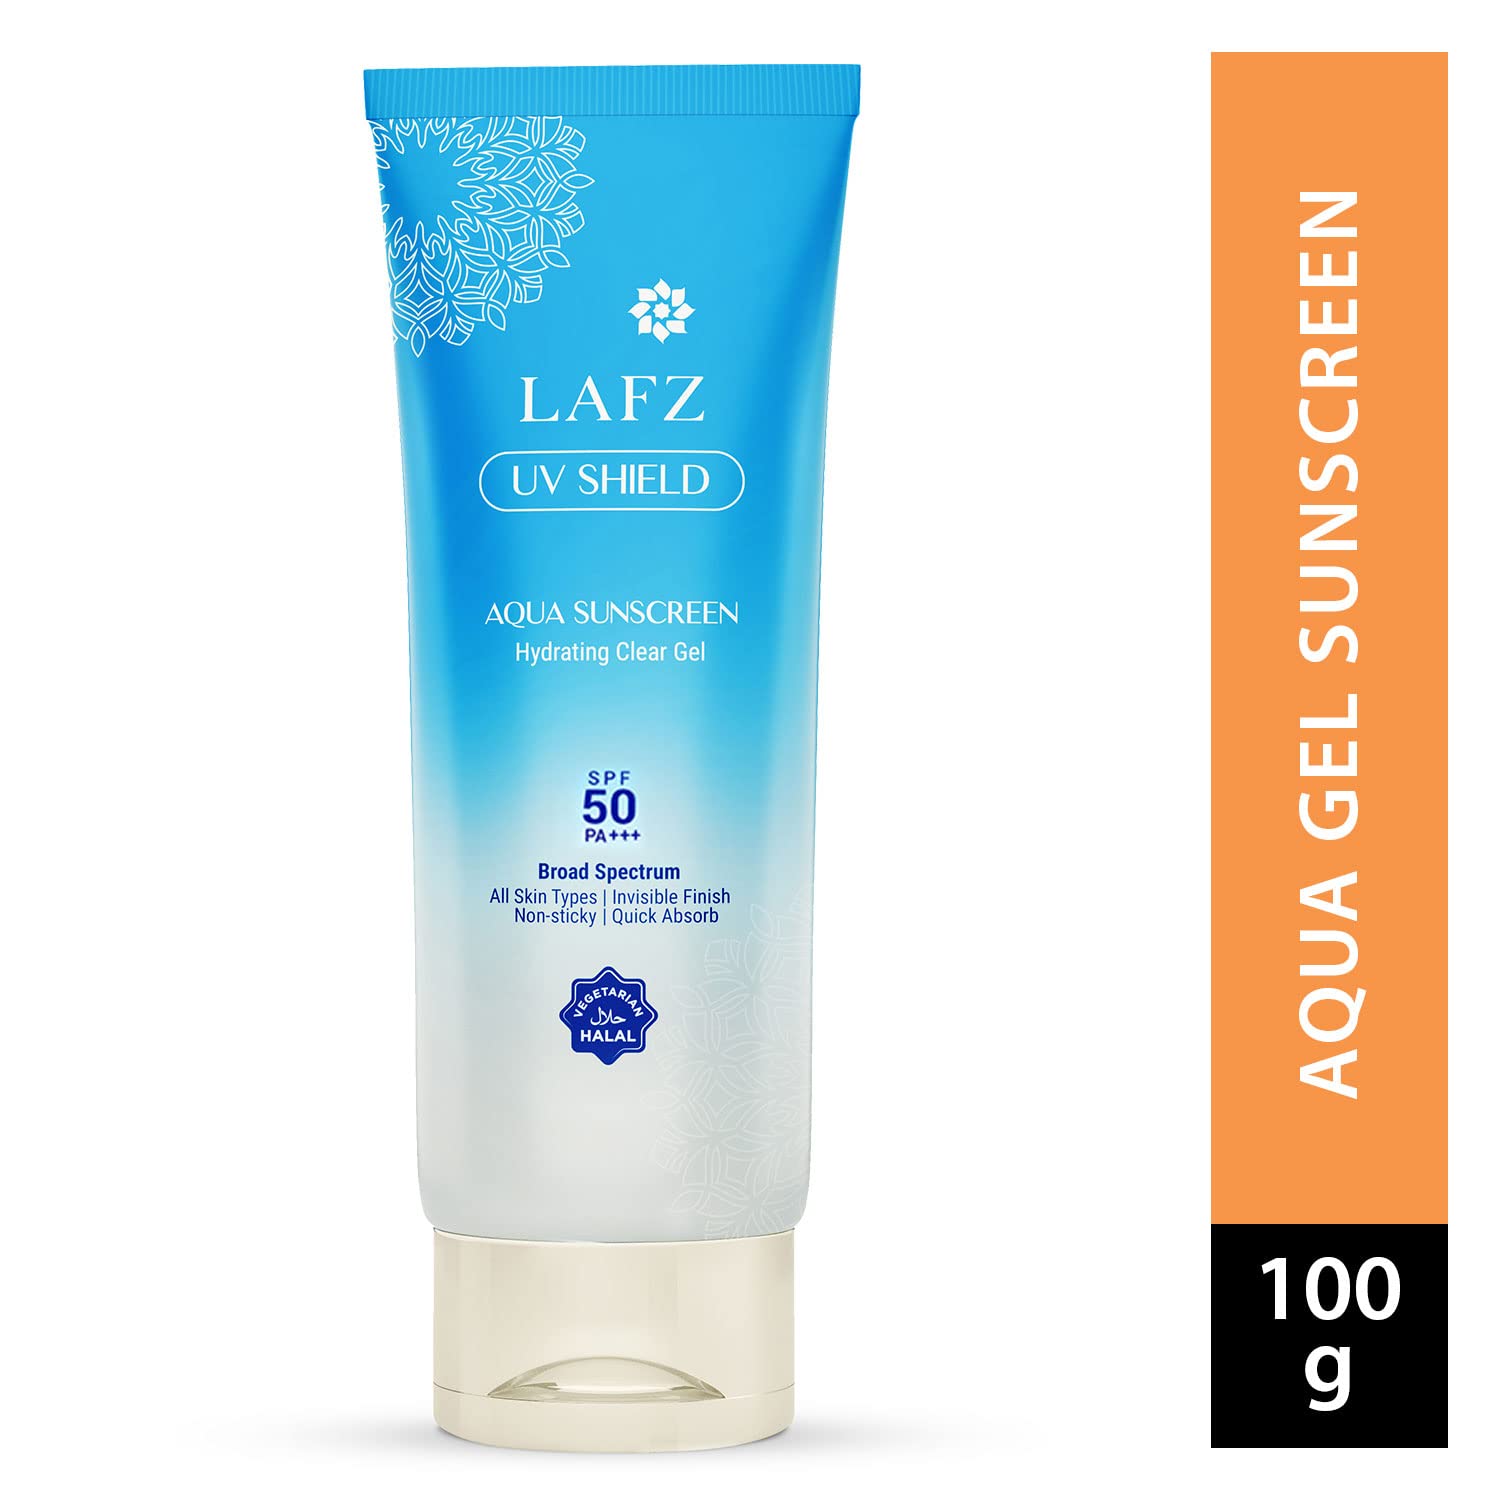 Lafz UV Shield Aqua Sunscreen